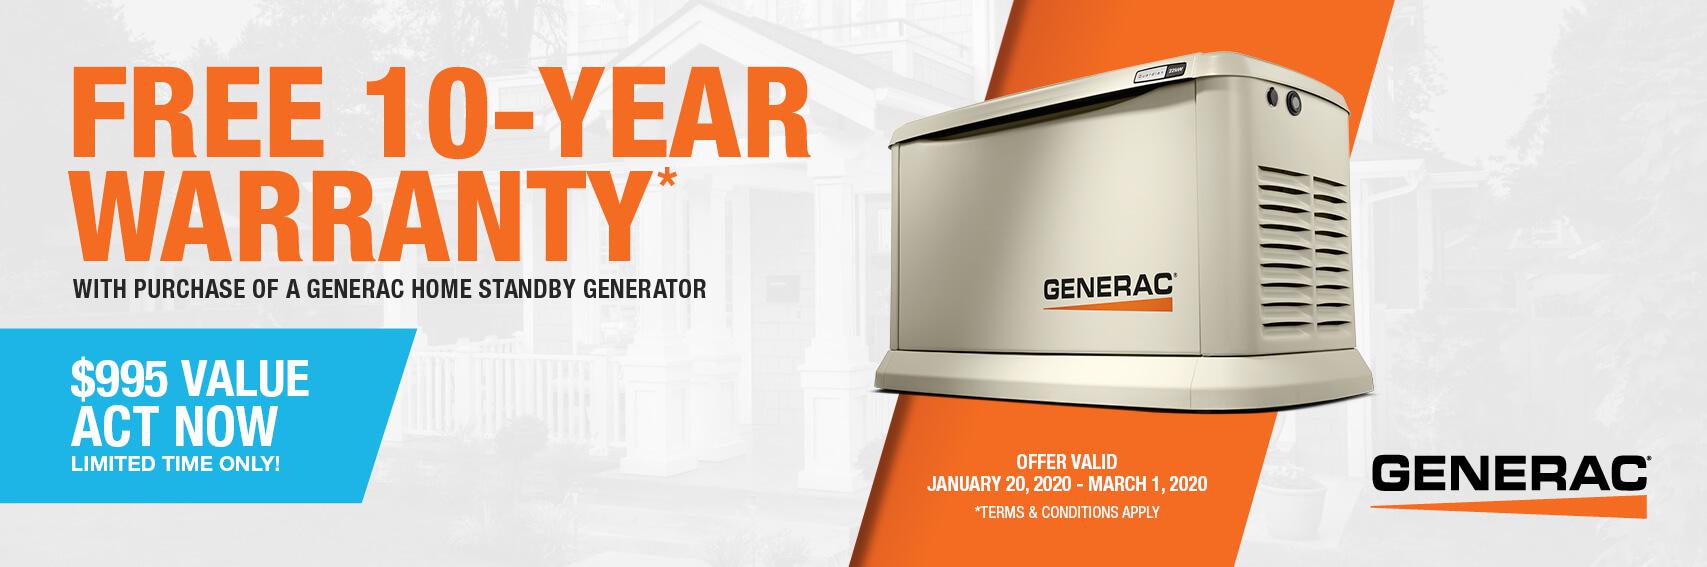 Homestandby Generator Deal | Warranty Offer | Generac Dealer | Panama City Beach, FL